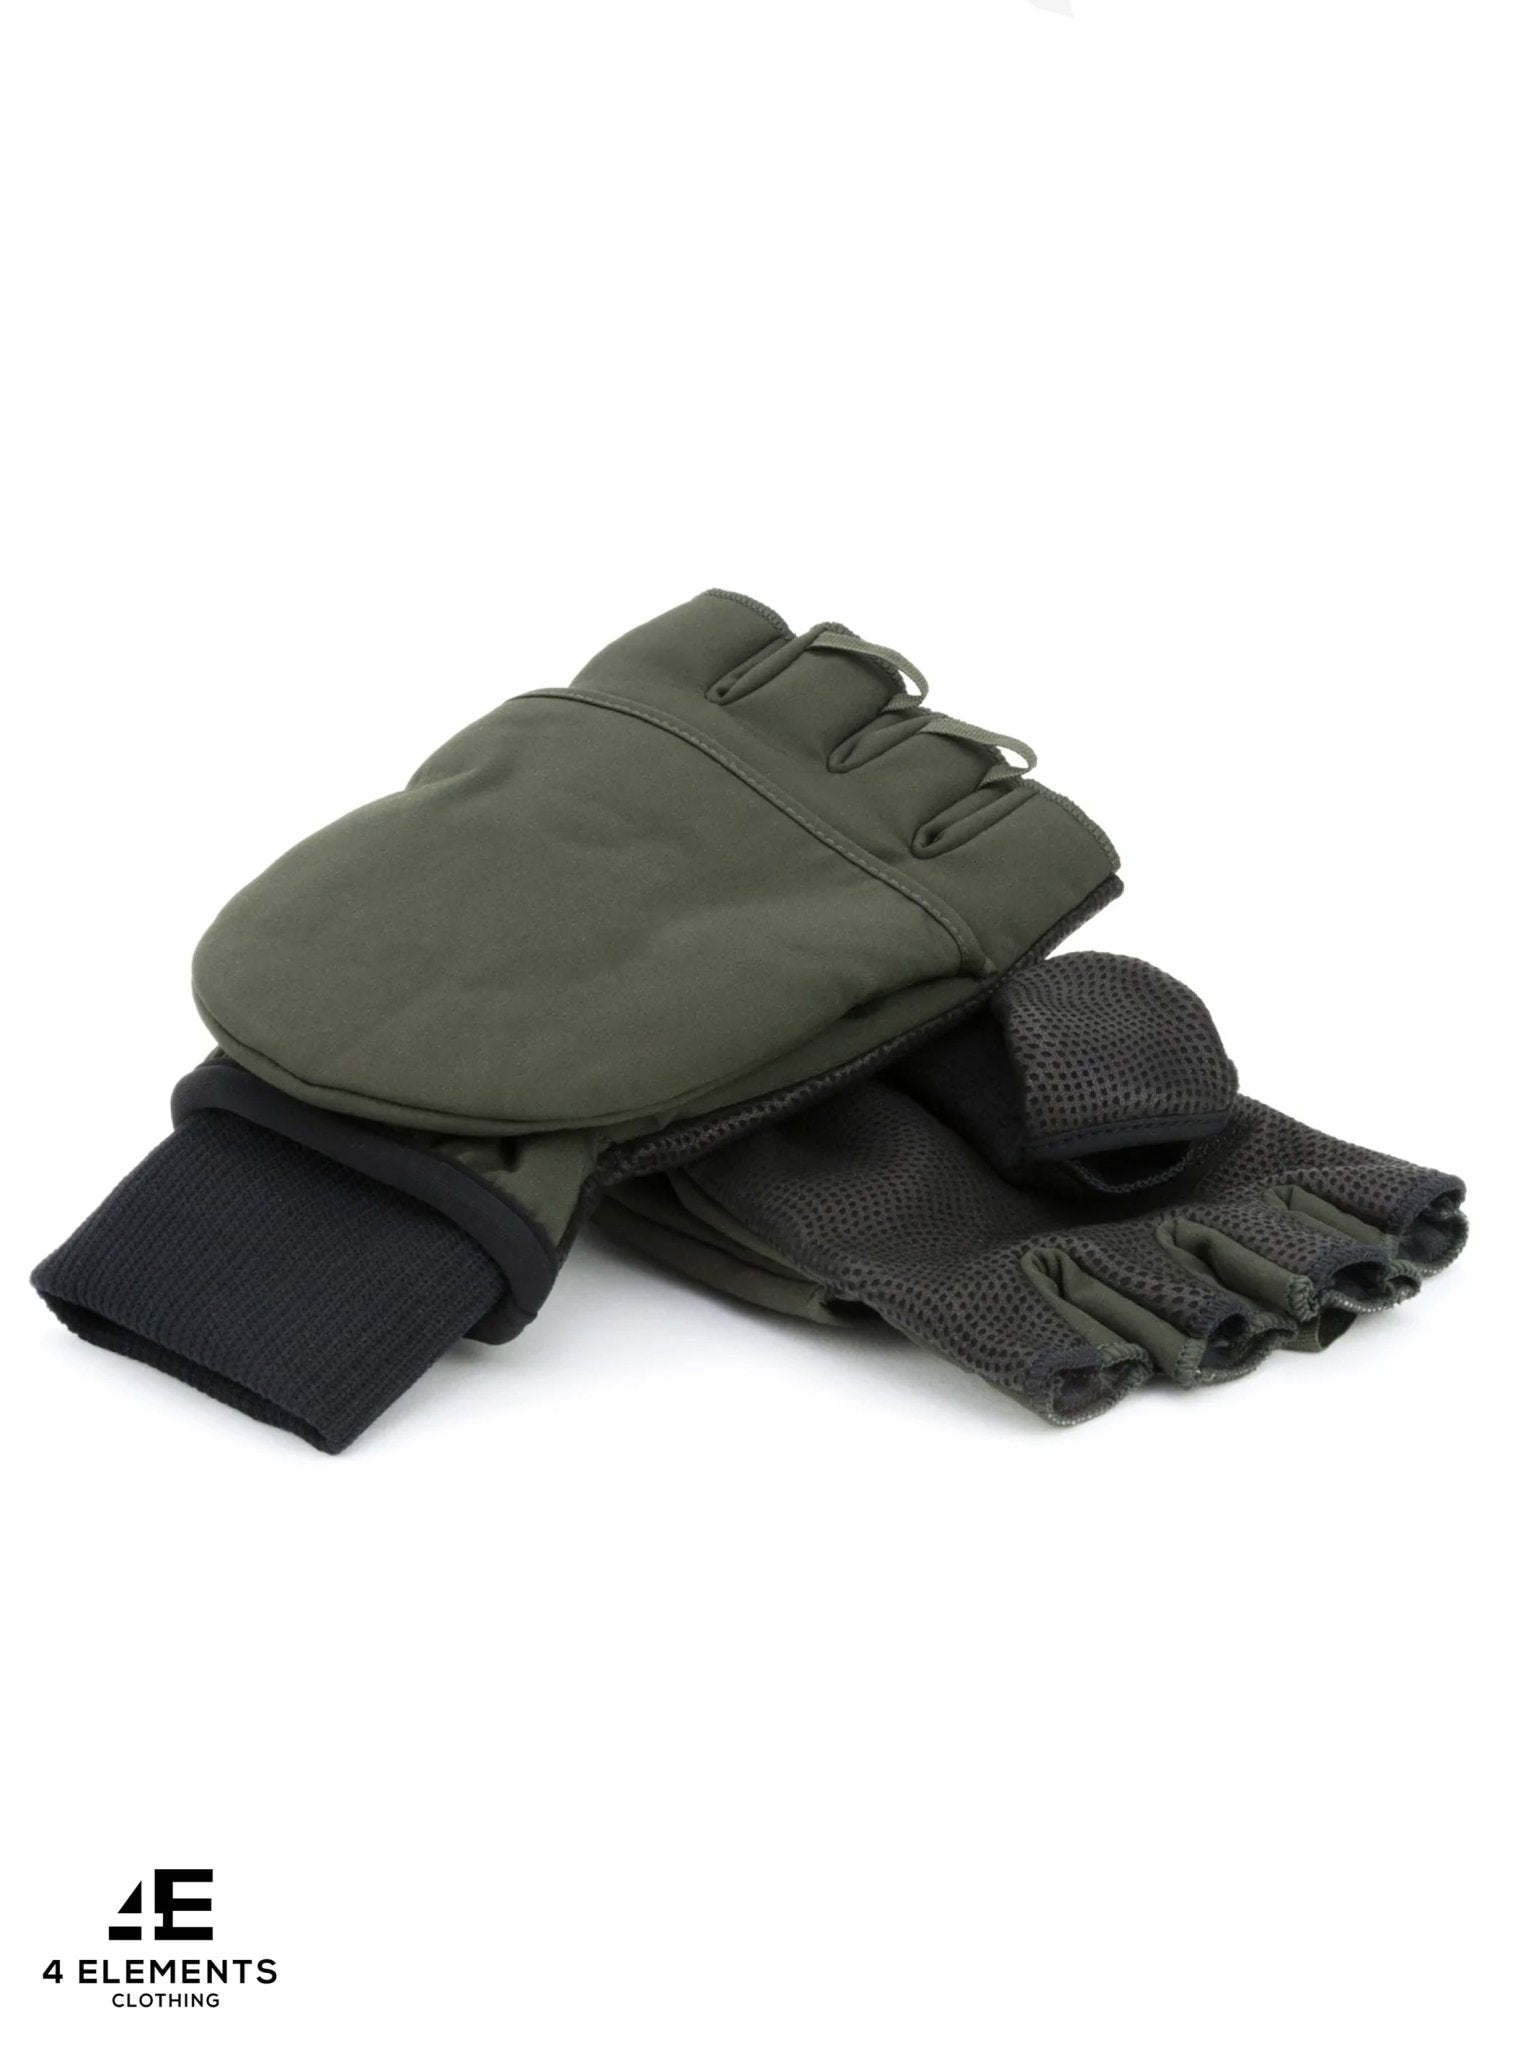 4elementsclothingSealSkinzSealSkinz - Windproof Gloves / Cold Weather Convertible Mitt / Glove - WarpoleGloves12100071001310